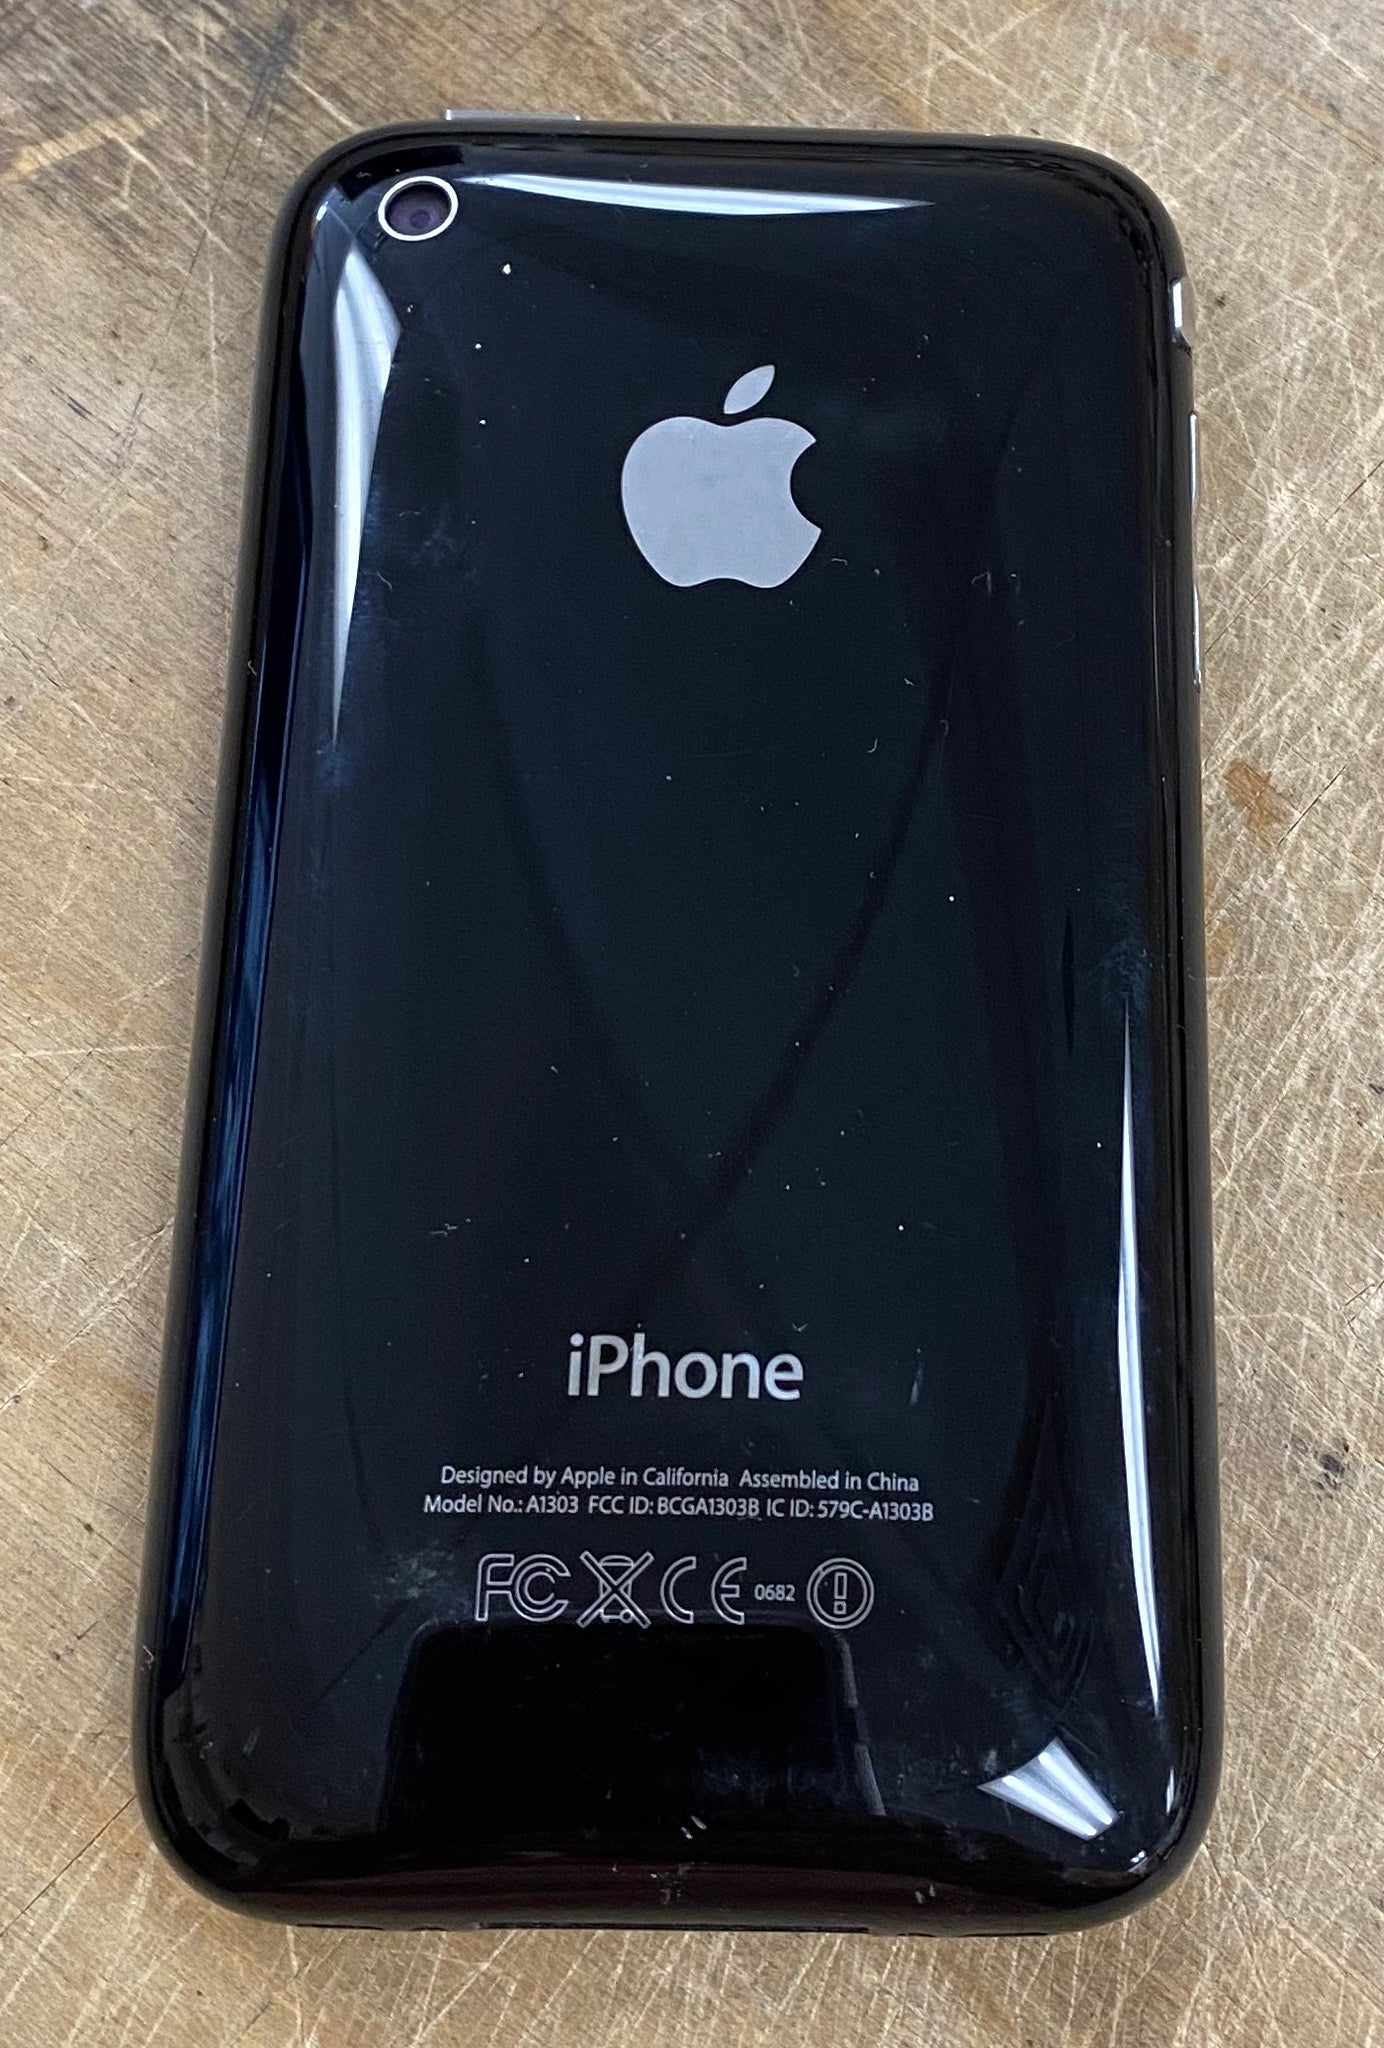 Apple iPhone 3GS 8GB ATT (MC640LL/A) – UNICOM, Inc.